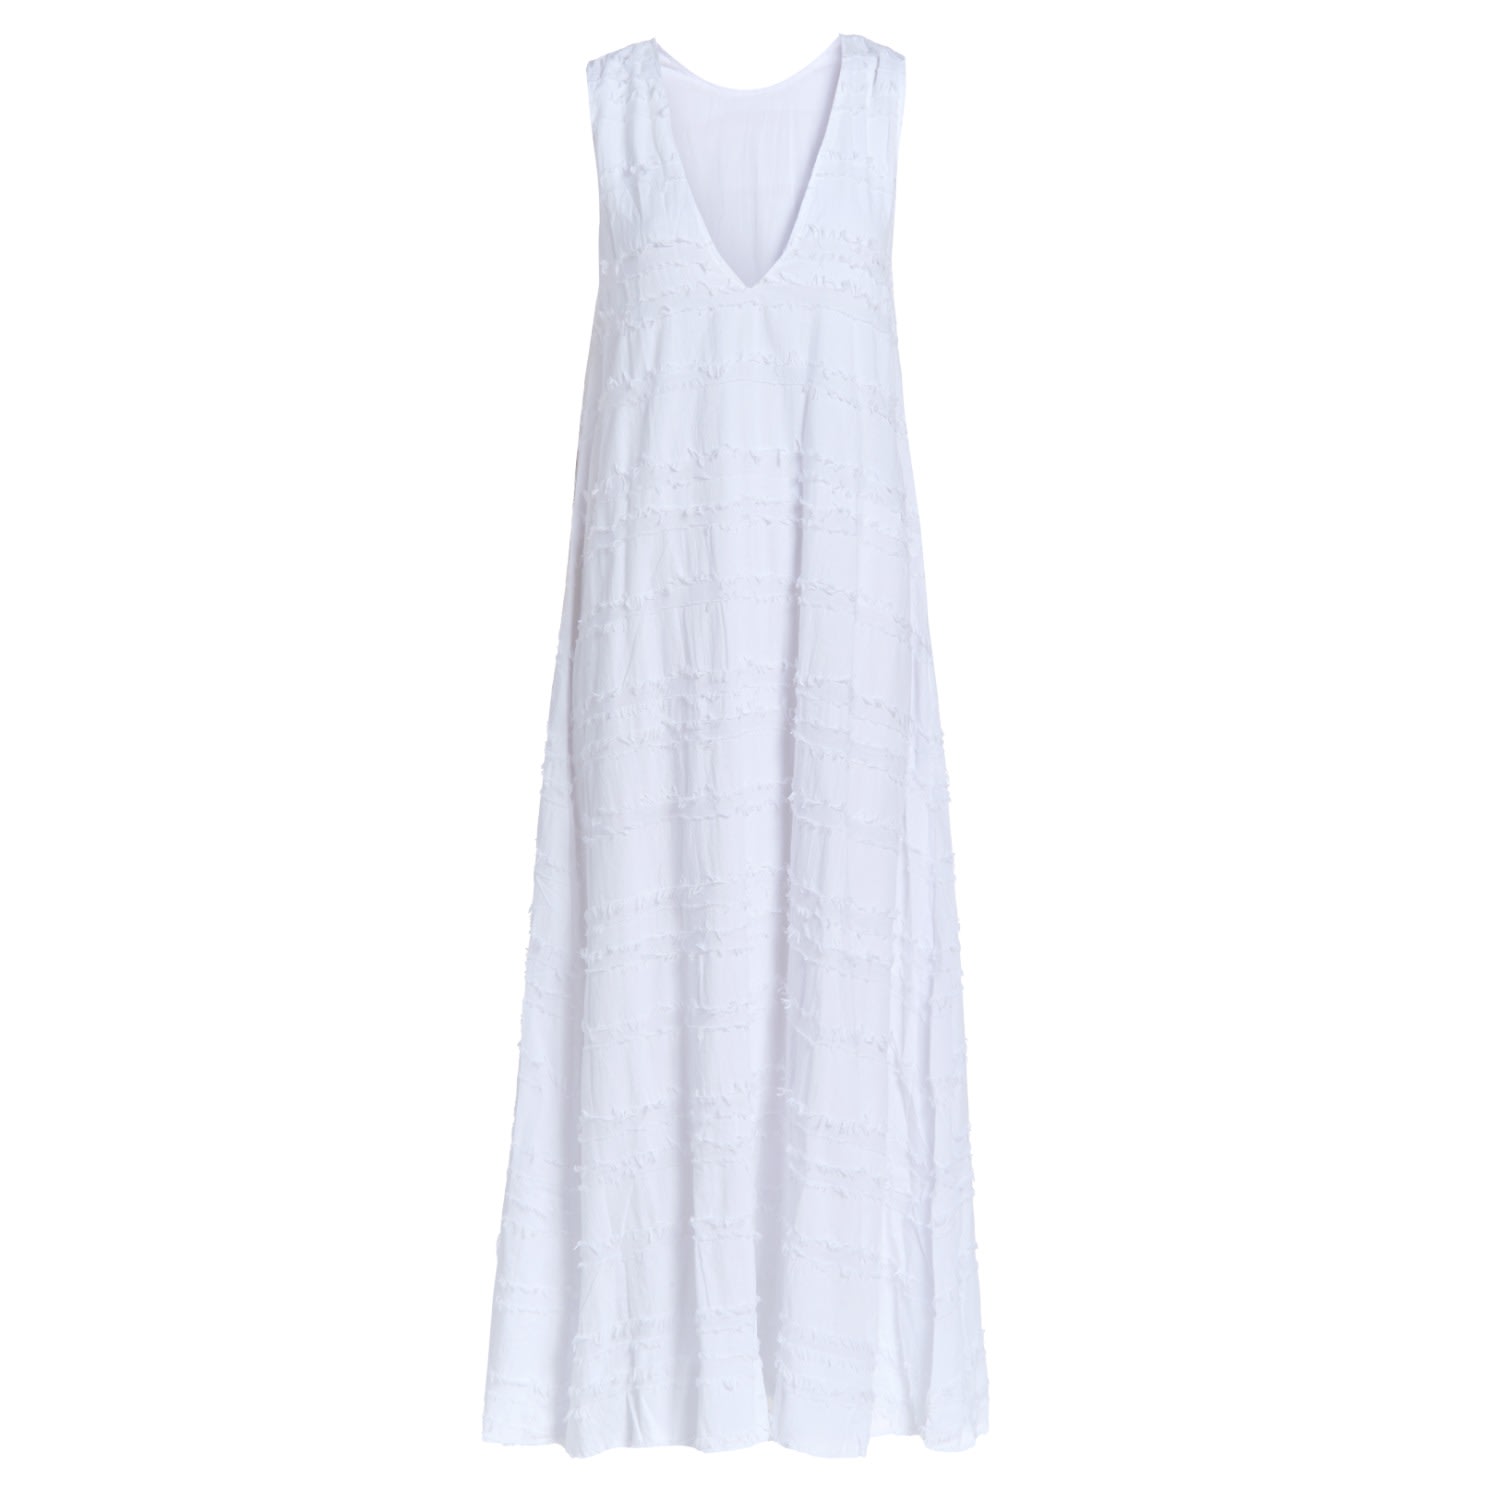 Women's White Gili Dress Xs/S puka